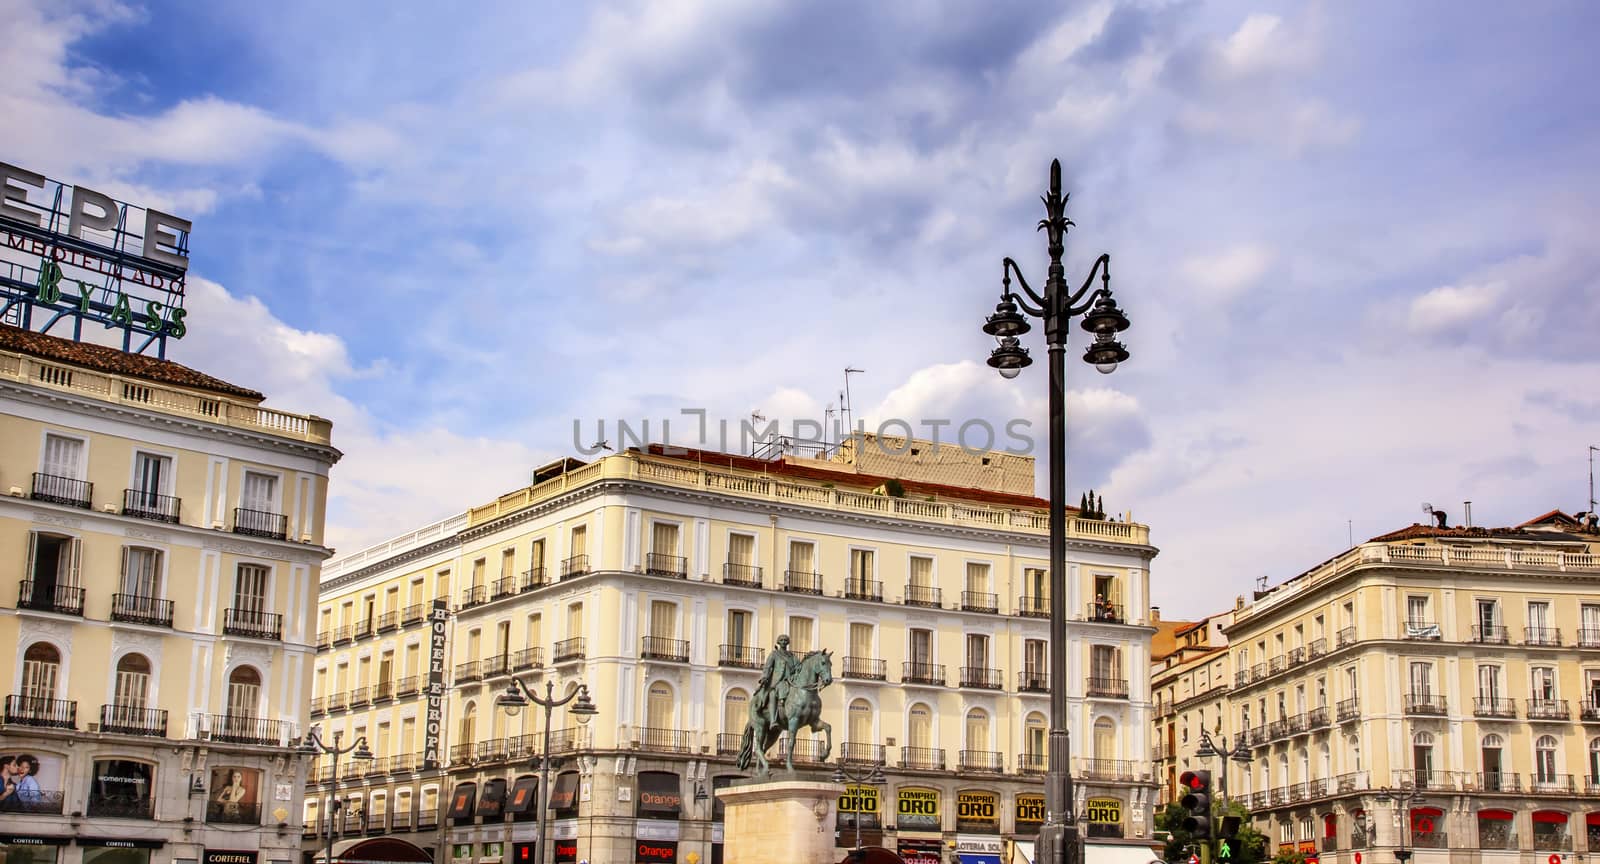 Puerta del Sol Gate of the Sun Most Famous Square King Carlos III Equestrian Statue in Madrid Spain King of Spain in the 1700s.  Replica of statue created in 1700s by Juan Pascal de de Mena